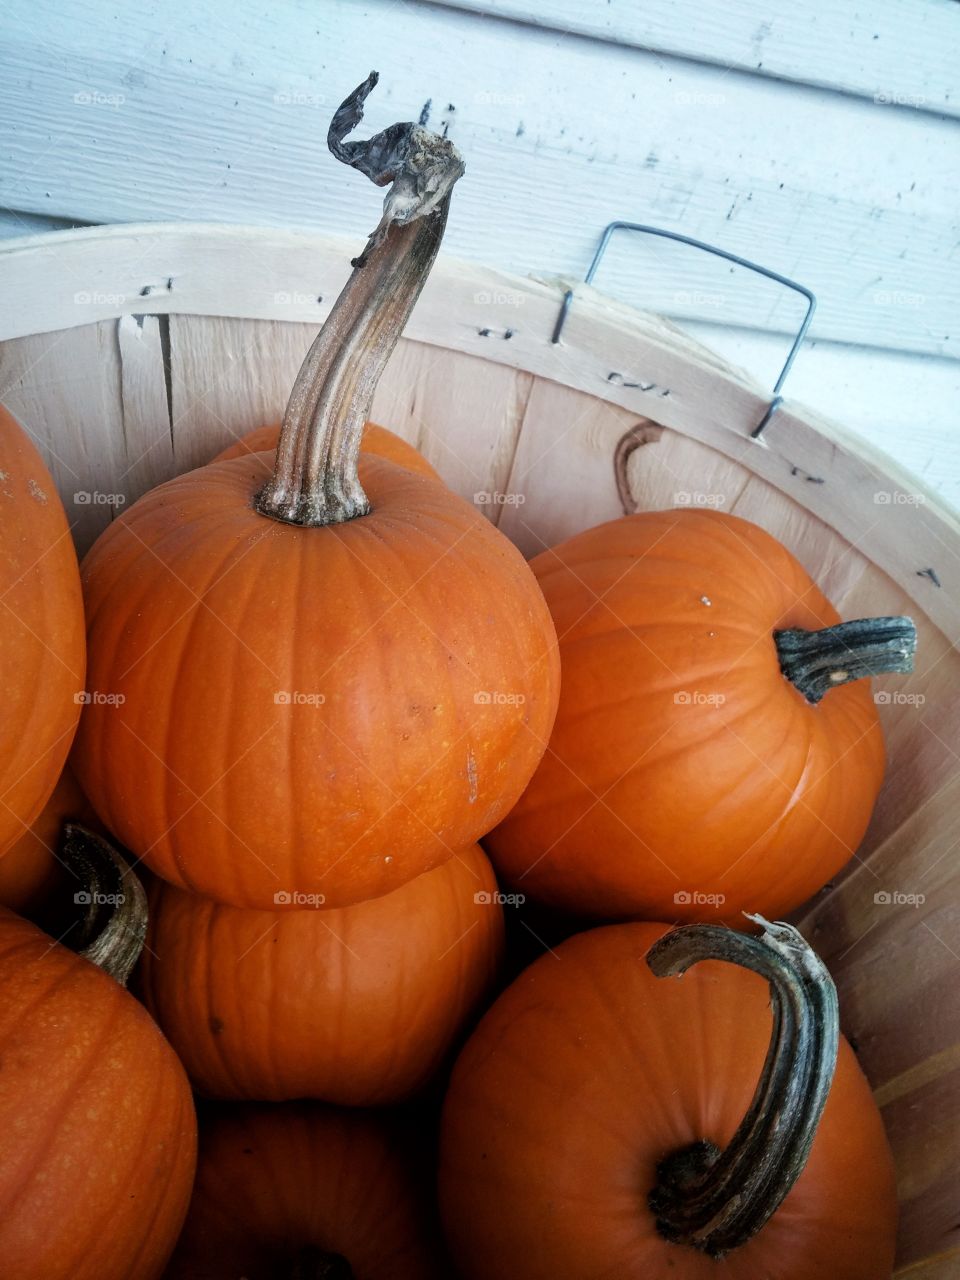 More Pumpkins in a basket